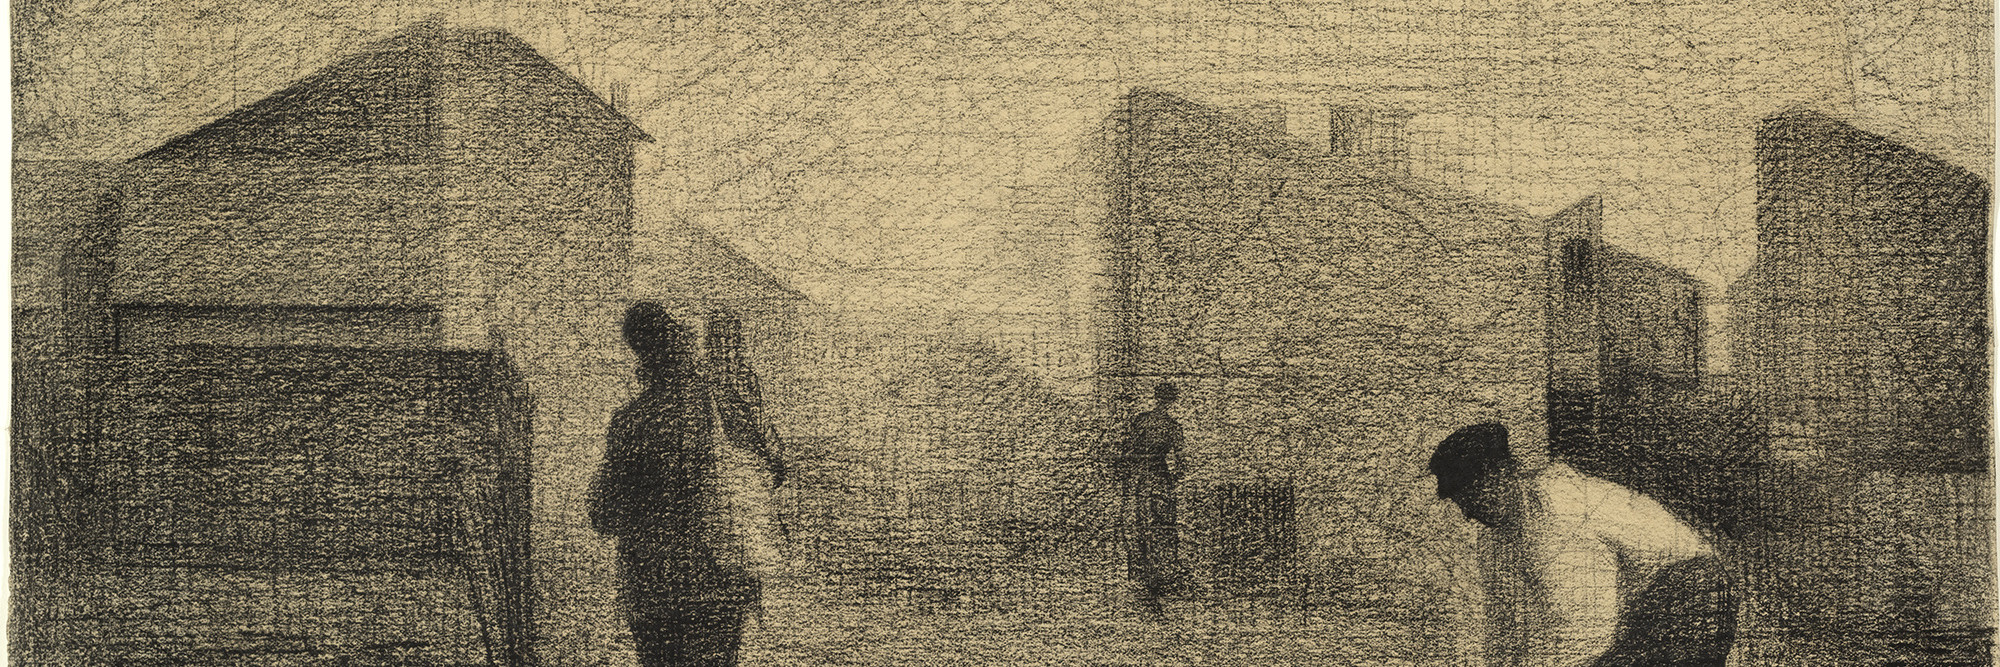 Georges-Pierre Seurat. Stone Breaker, Le Raincy. c. 1879–81. Conté crayon and graphite on paper, 12 1/8 × 14 3/4″ (30.8 × 37.5 cm). The Museum of Modern Art. Lillie P. Bliss Collection